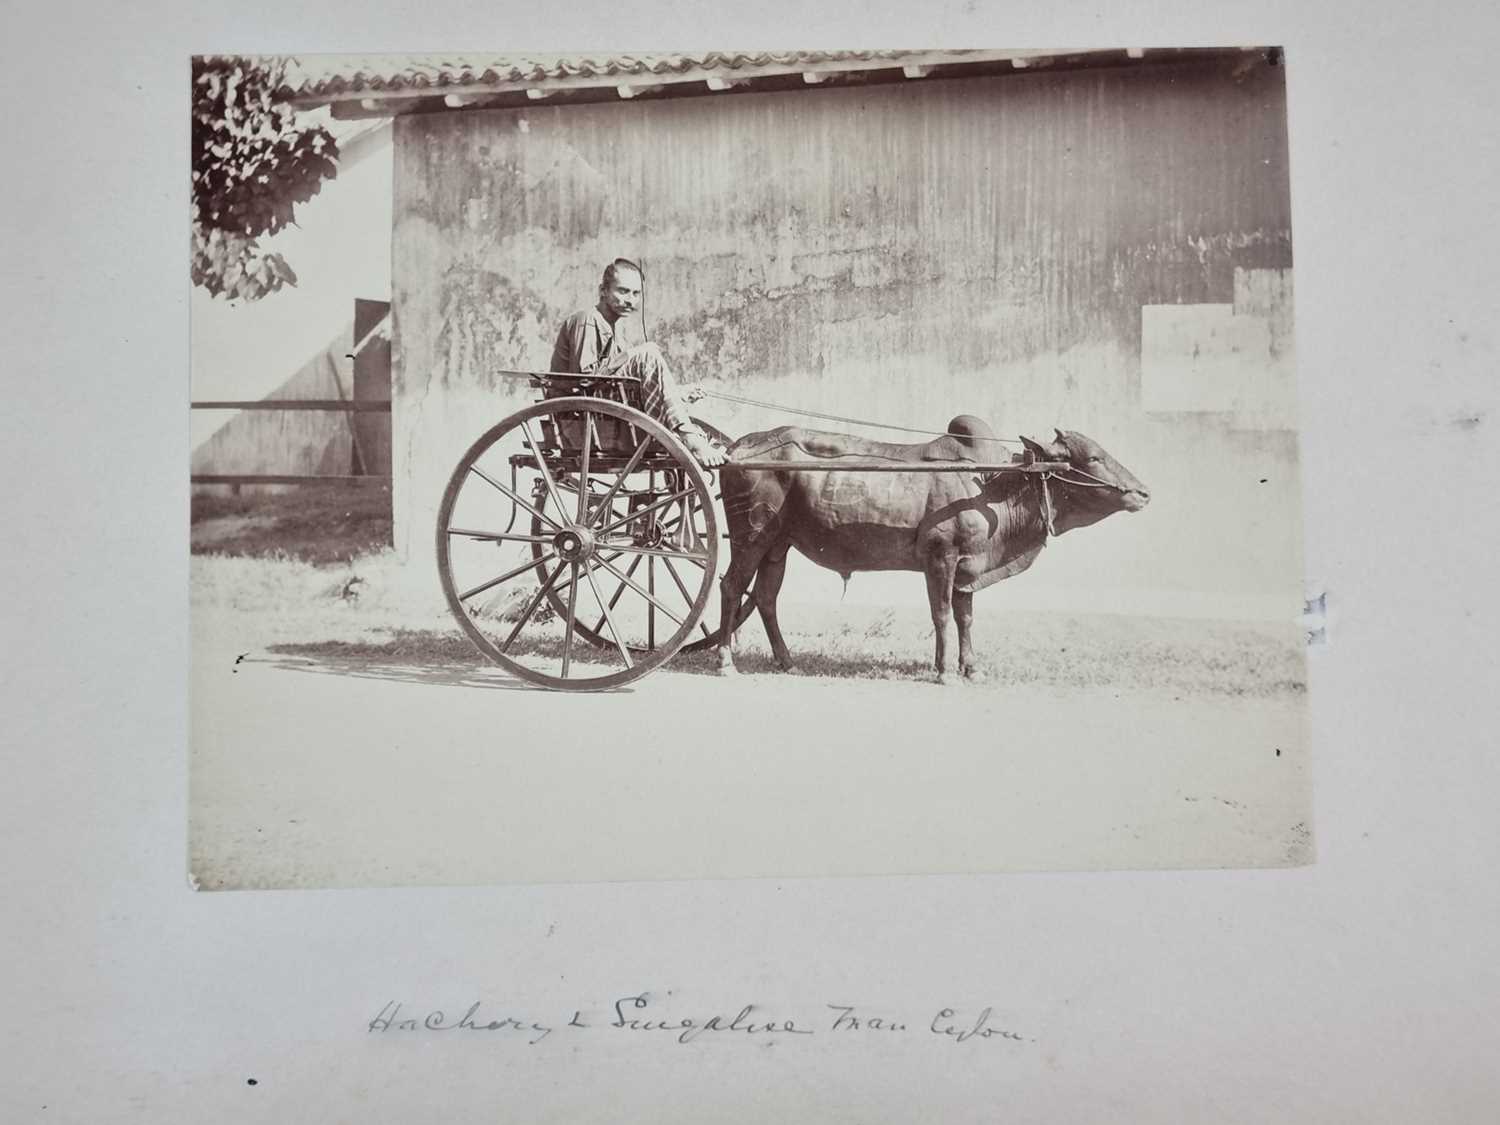 Ceylon (Sri Lanka) Interest - Photograph and watercolour album - Image 9 of 26